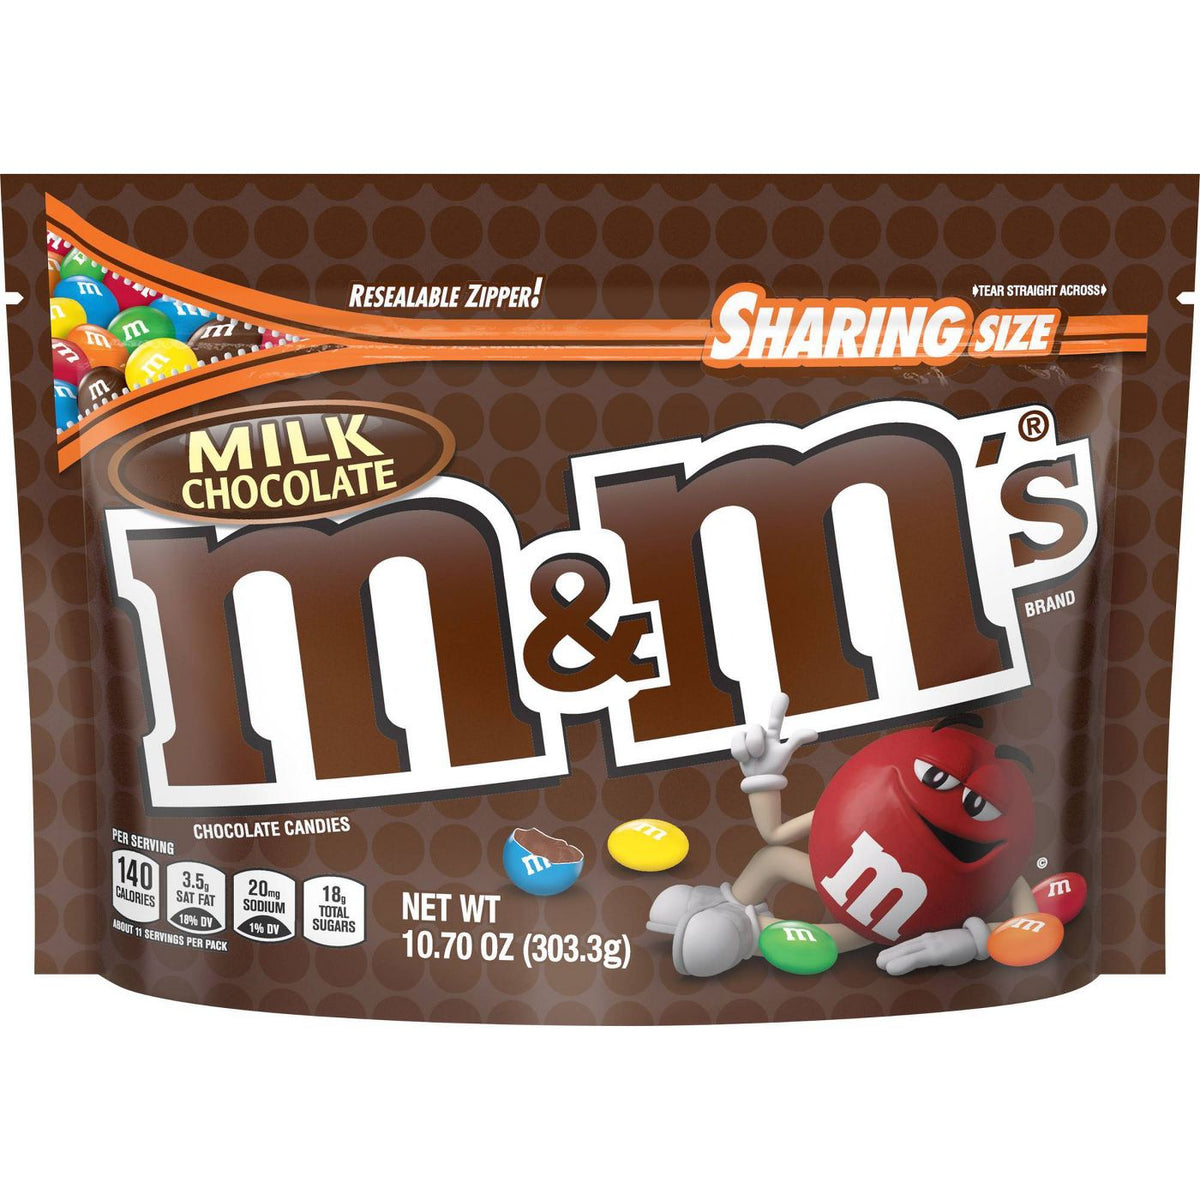 M&M'S Chocolate Candies, Milk Chocolate, Share Size